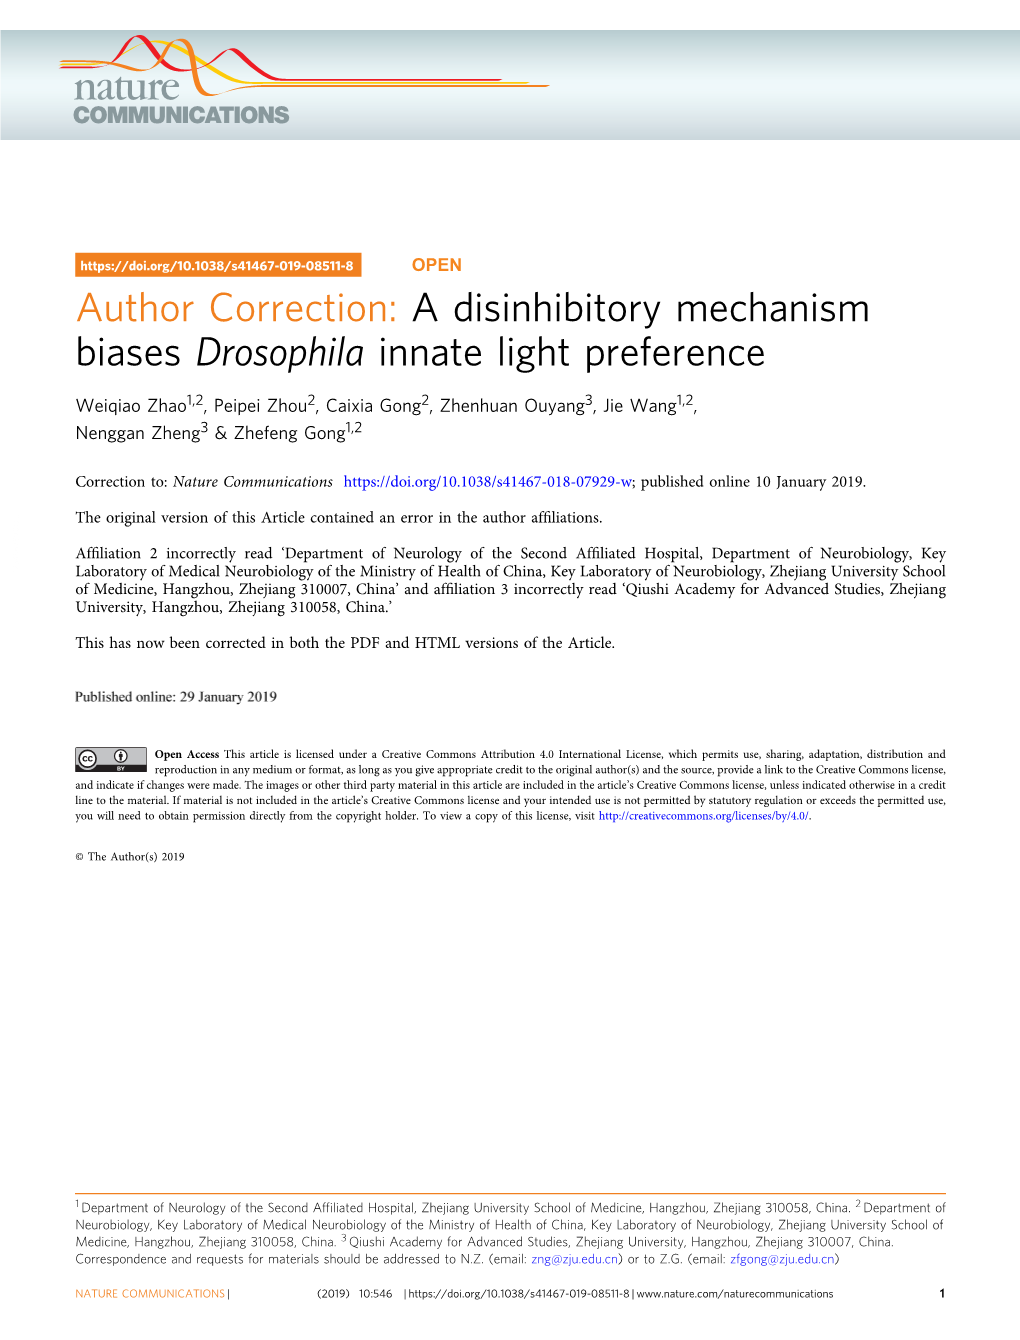 A Disinhibitory Mechanism Biases Drosophila Innate Light Preference